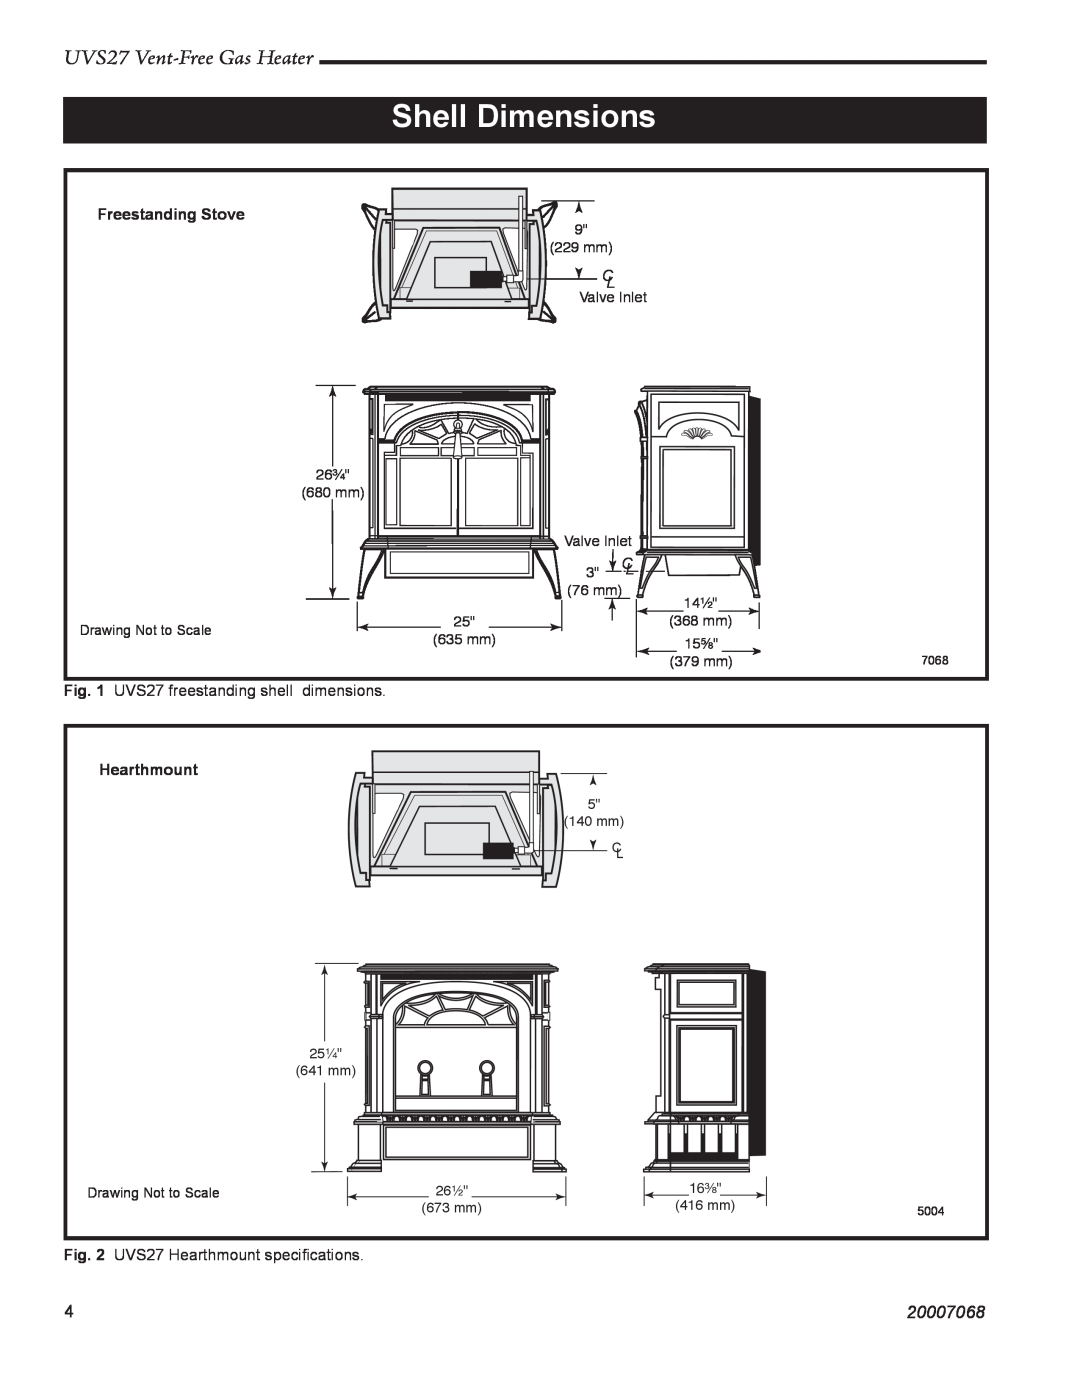 Vermont Casting 4090 - 4092 manual Shell Dimensions, UVS27 Vent-FreeGas Heater, 20007068, Freestanding Stove, Hearthmount 